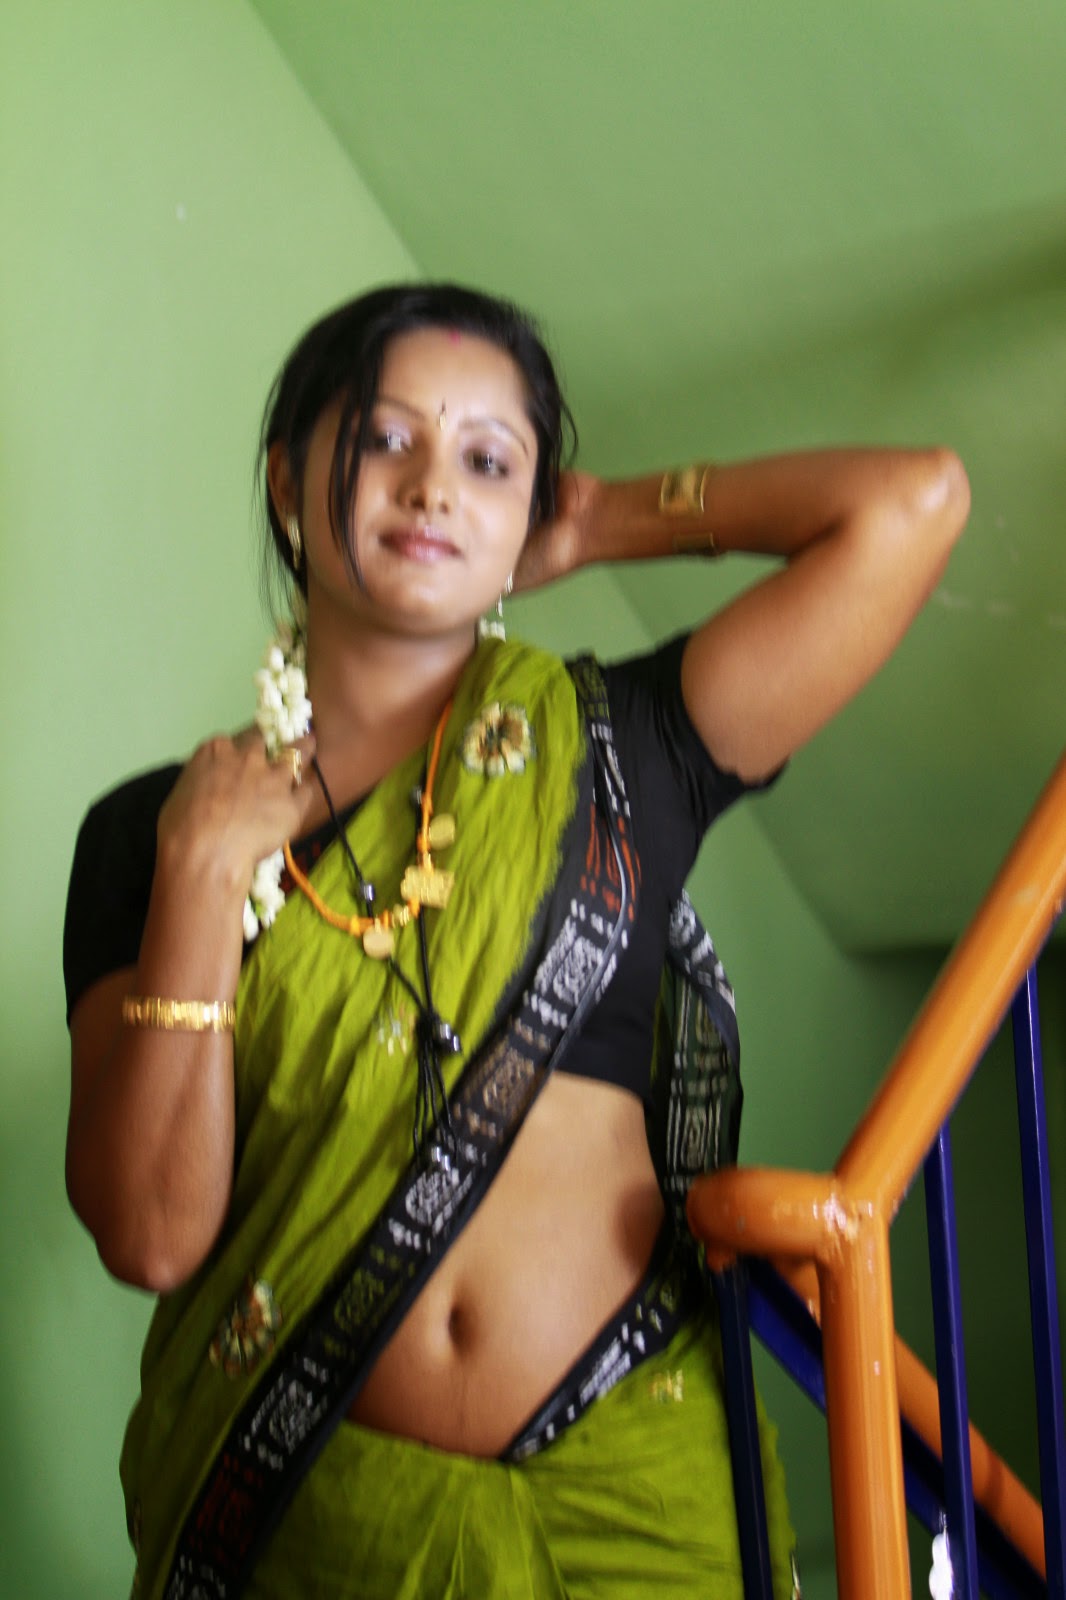 Health Sex Education Advices by Dr. Mandaram: real life cheating kerala  mallu aunty house wife prameela sexy green saree pallu drop big boobies  deep navel showing seduce young servant